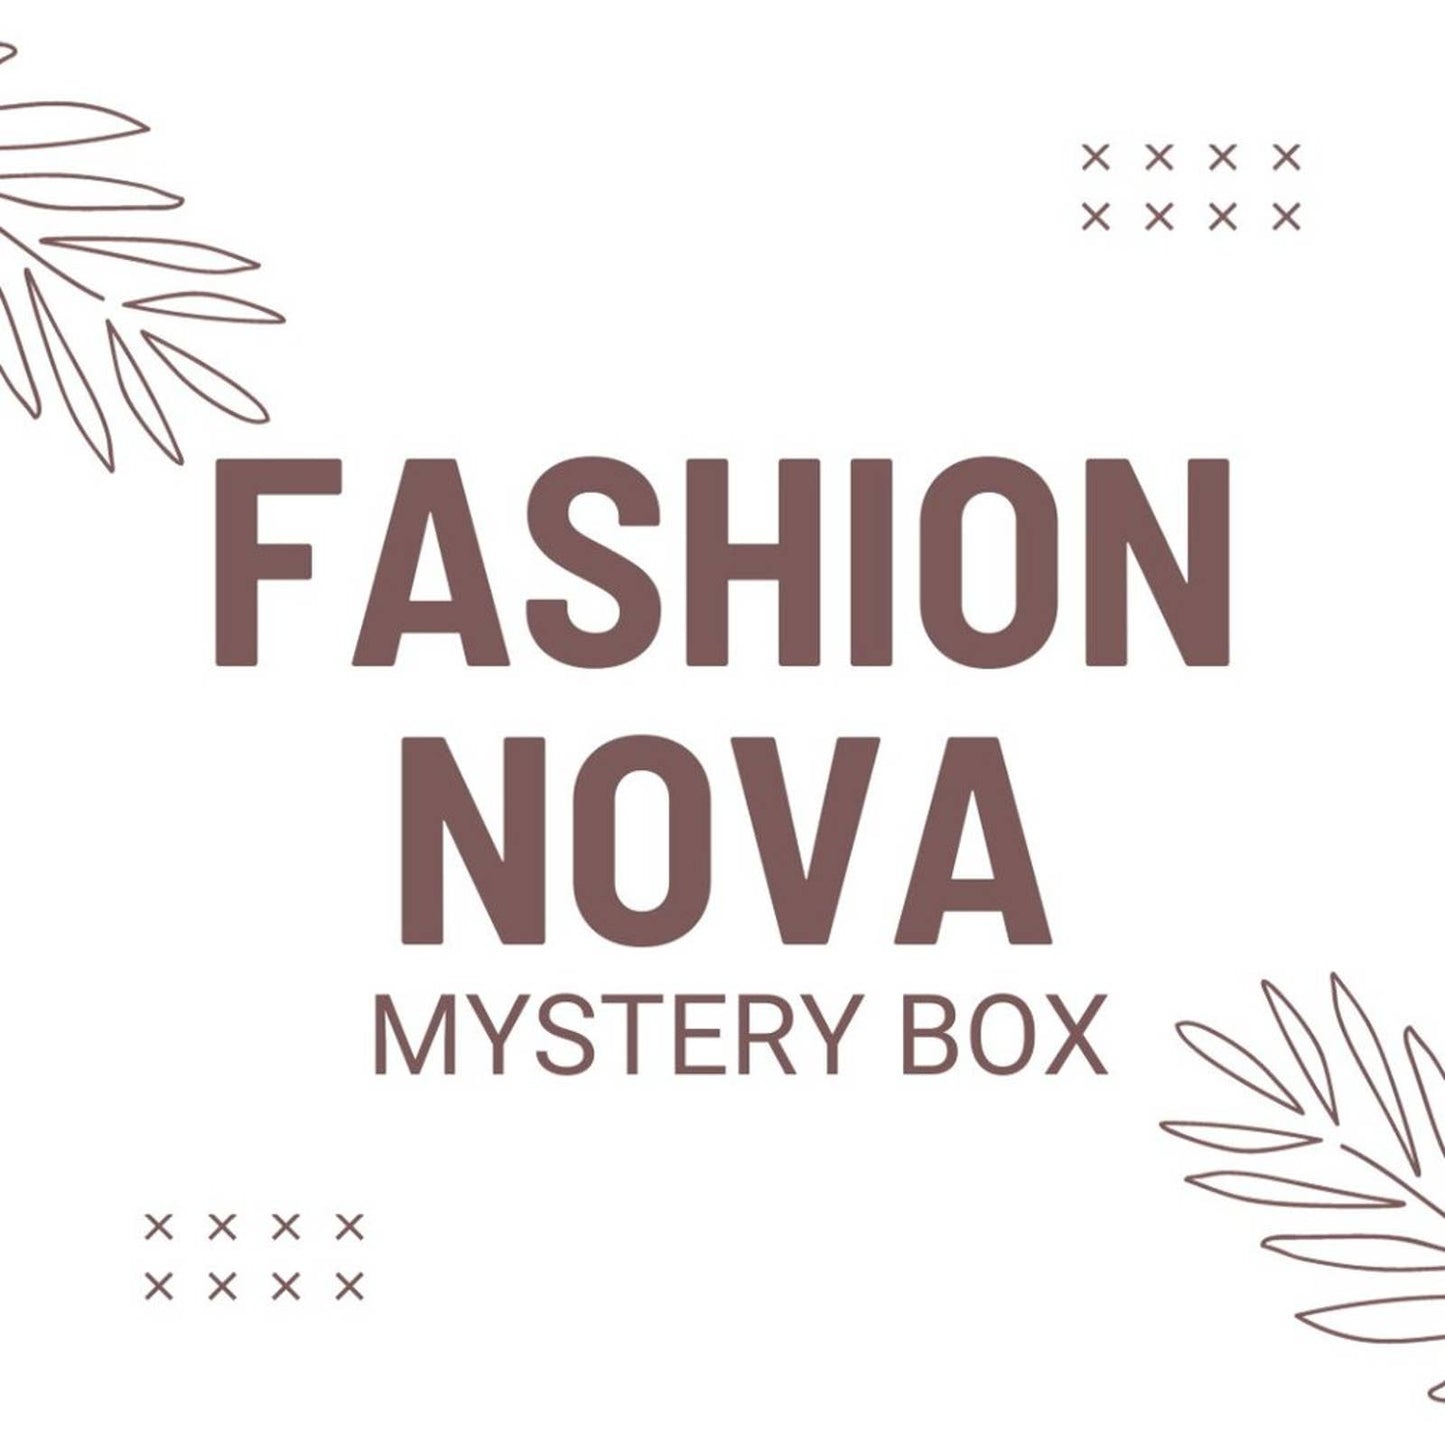 Fashion Nova Mystery Box